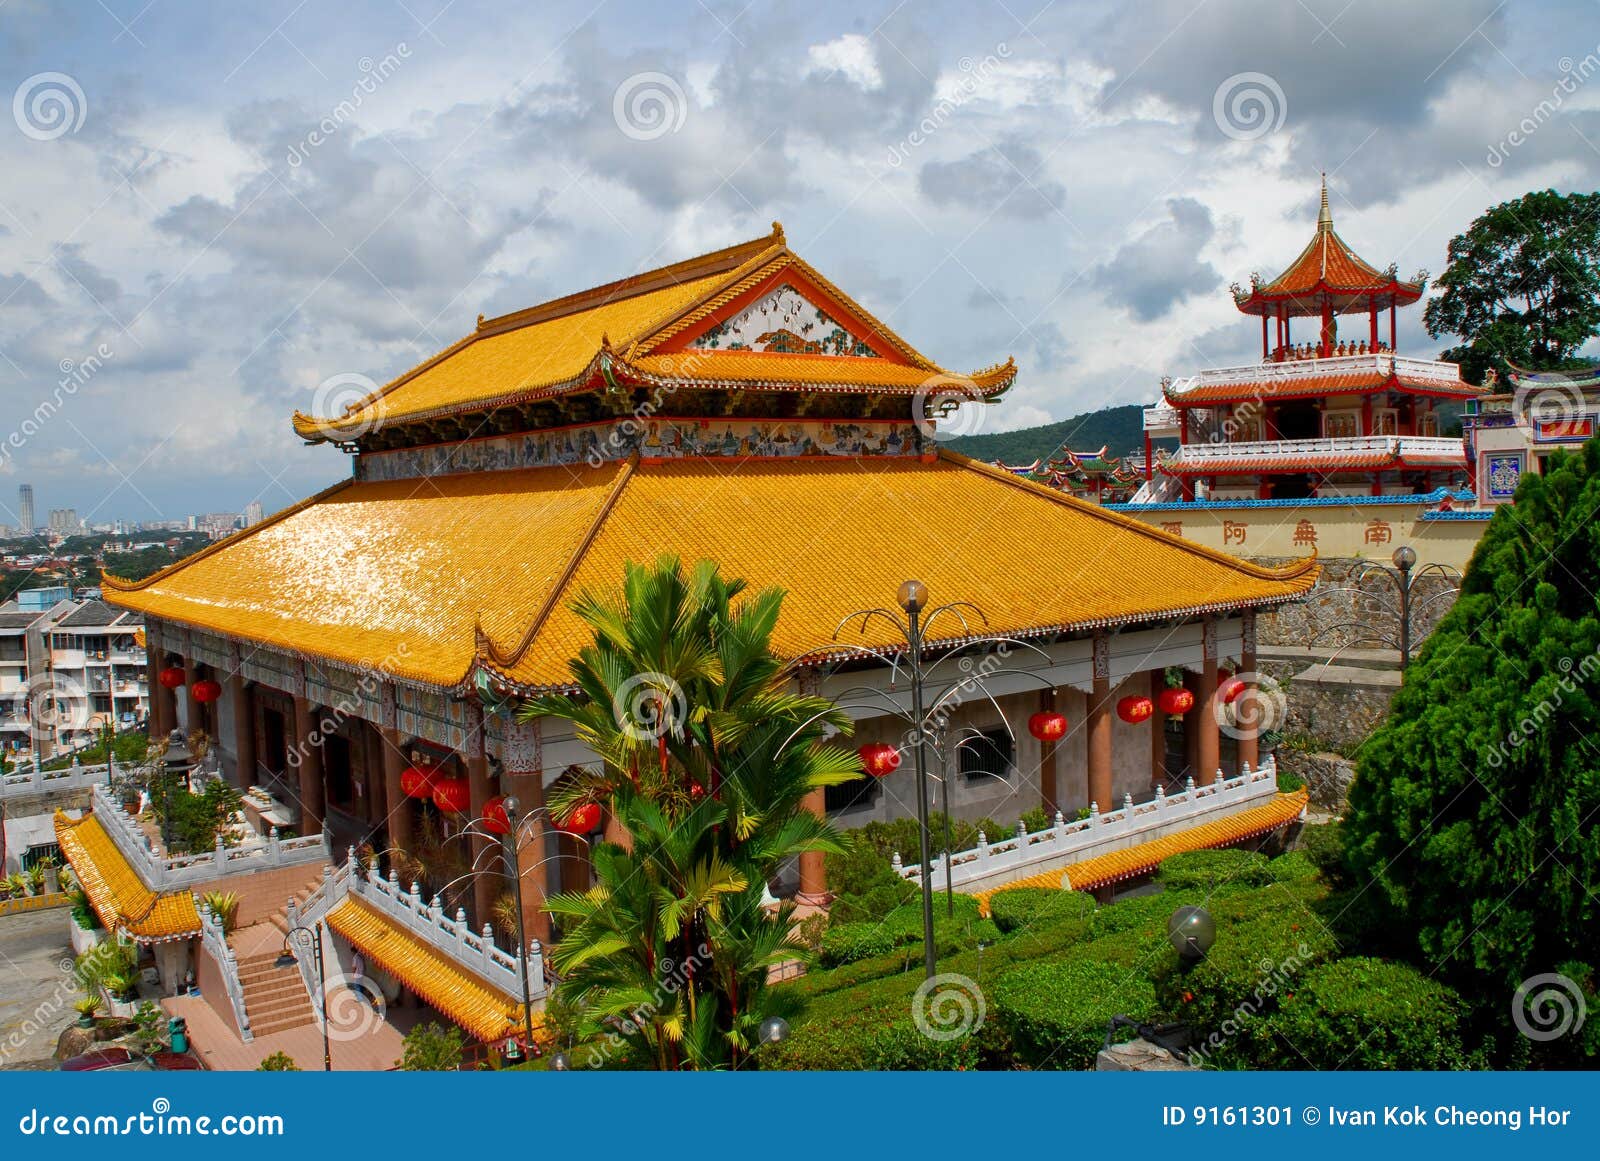 penang - temple of supreme bliss (kek lok si)